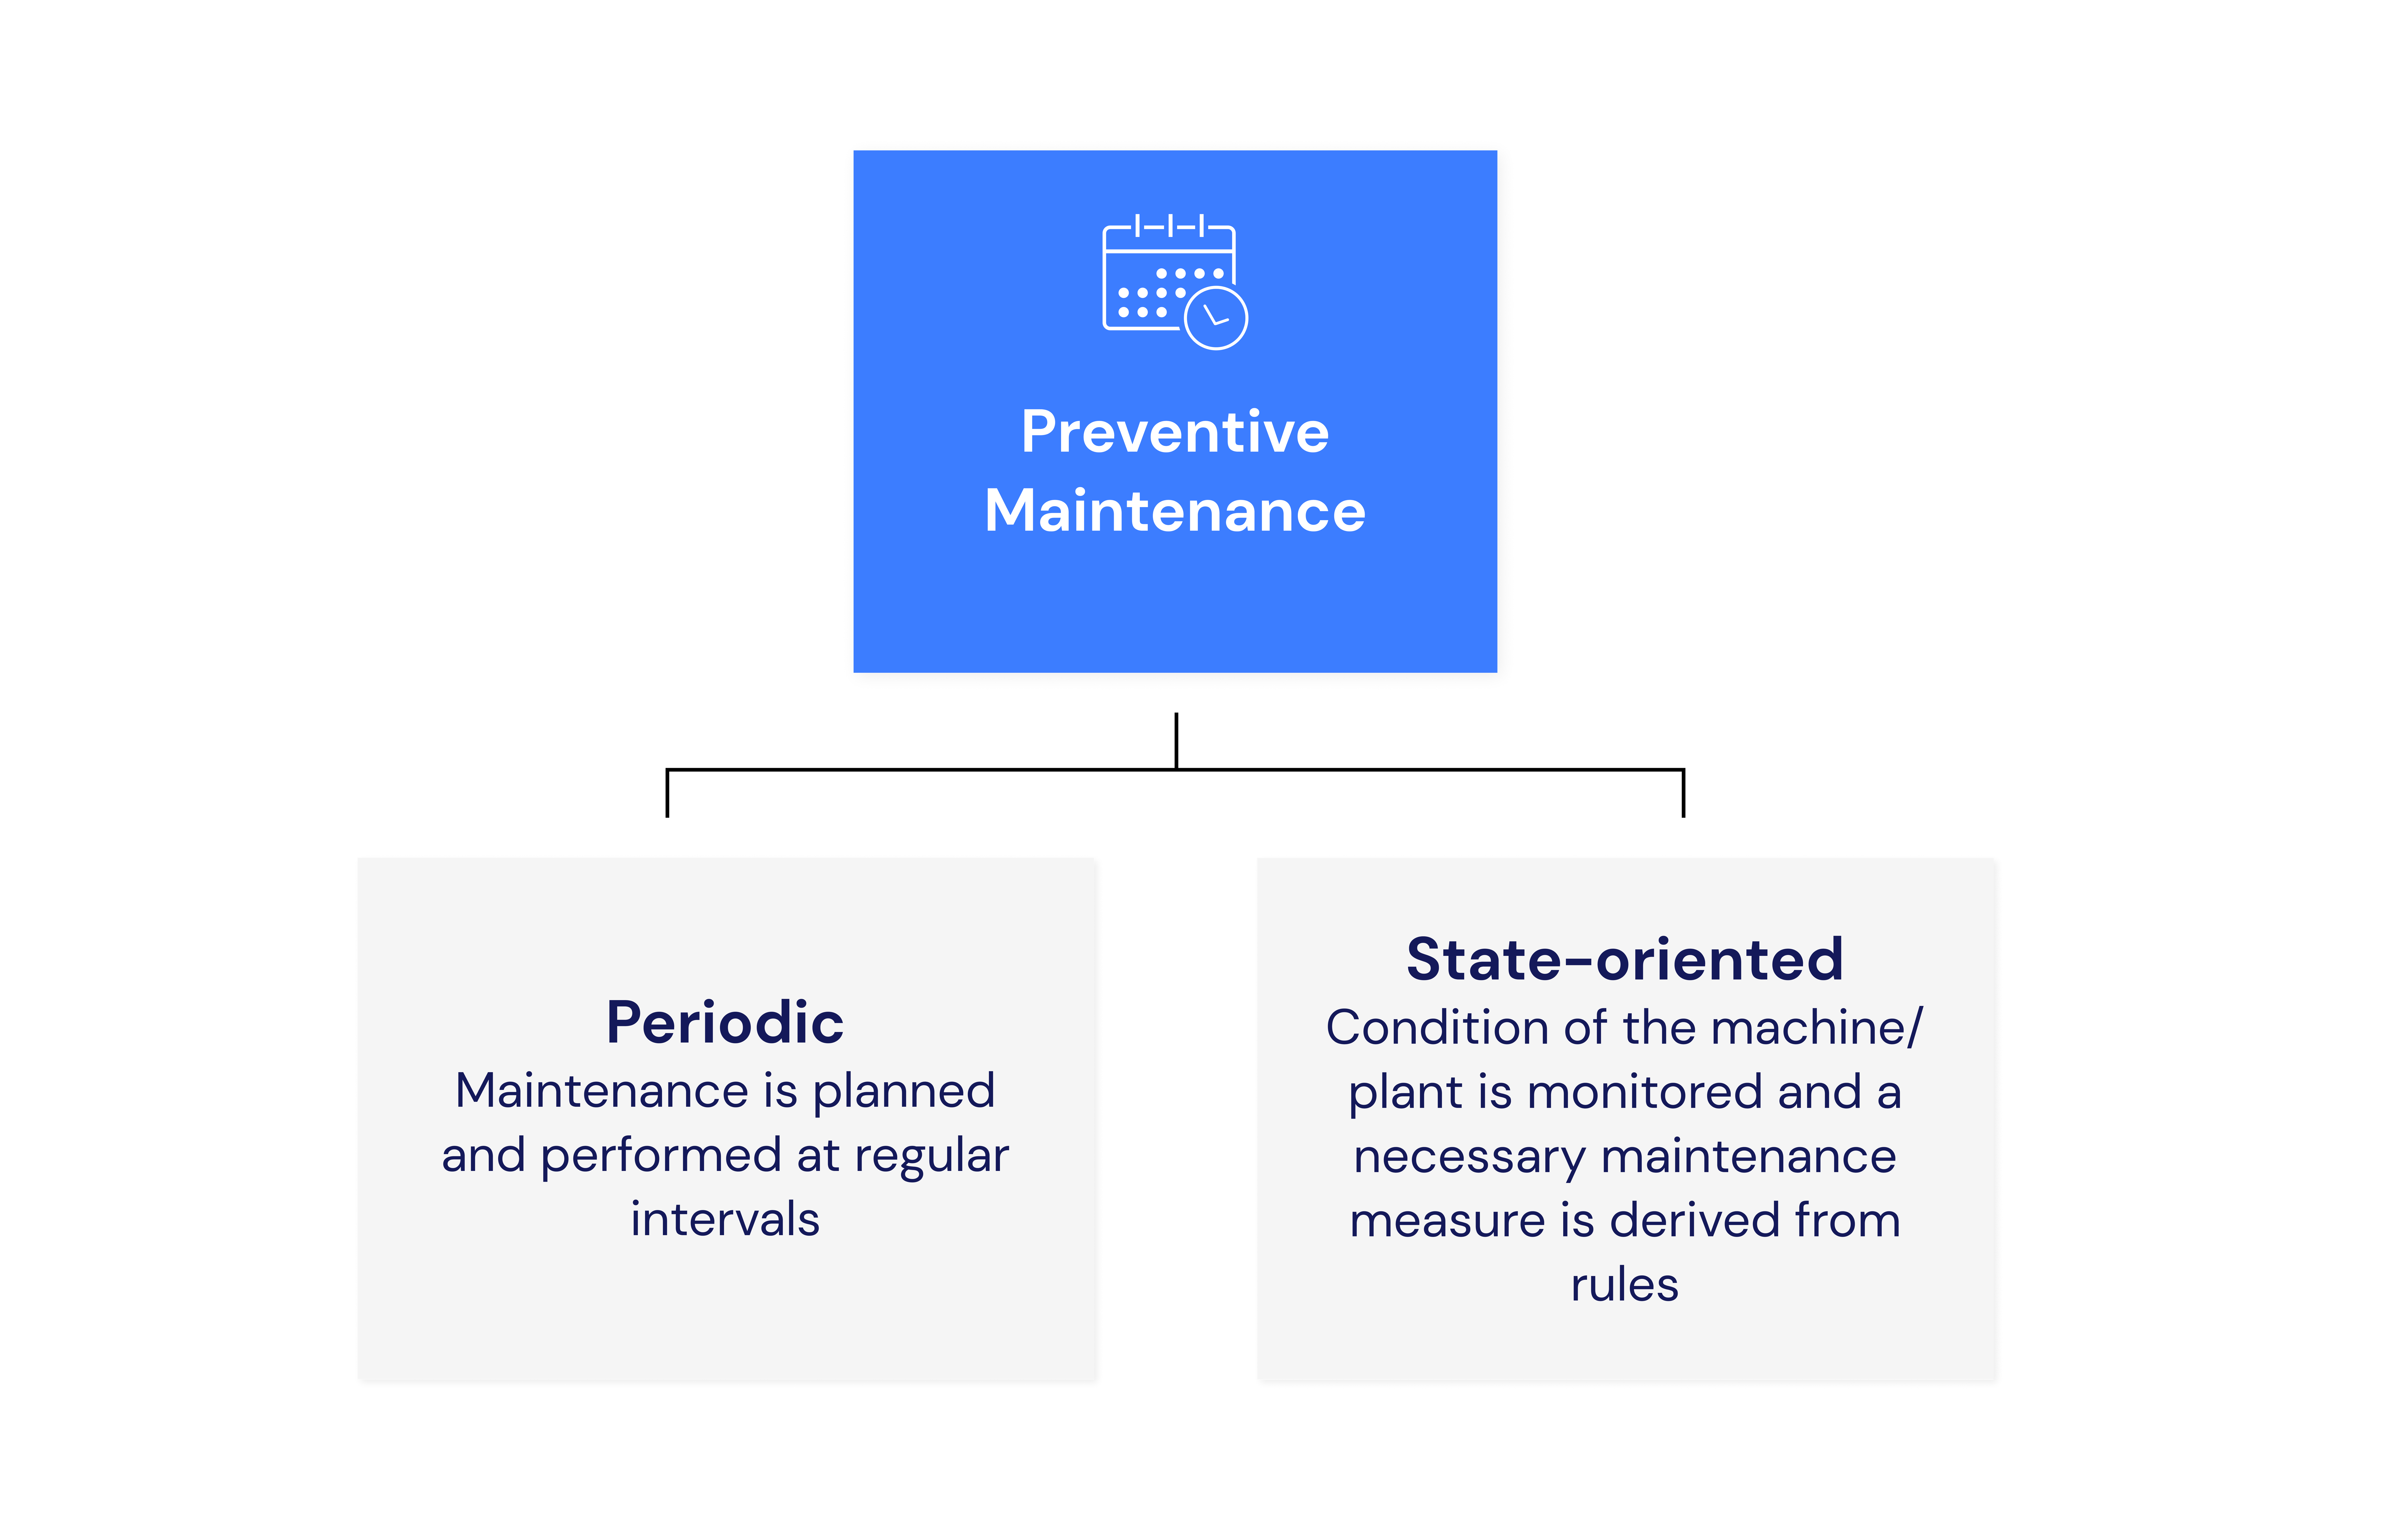 2 forms of preventive maintenance